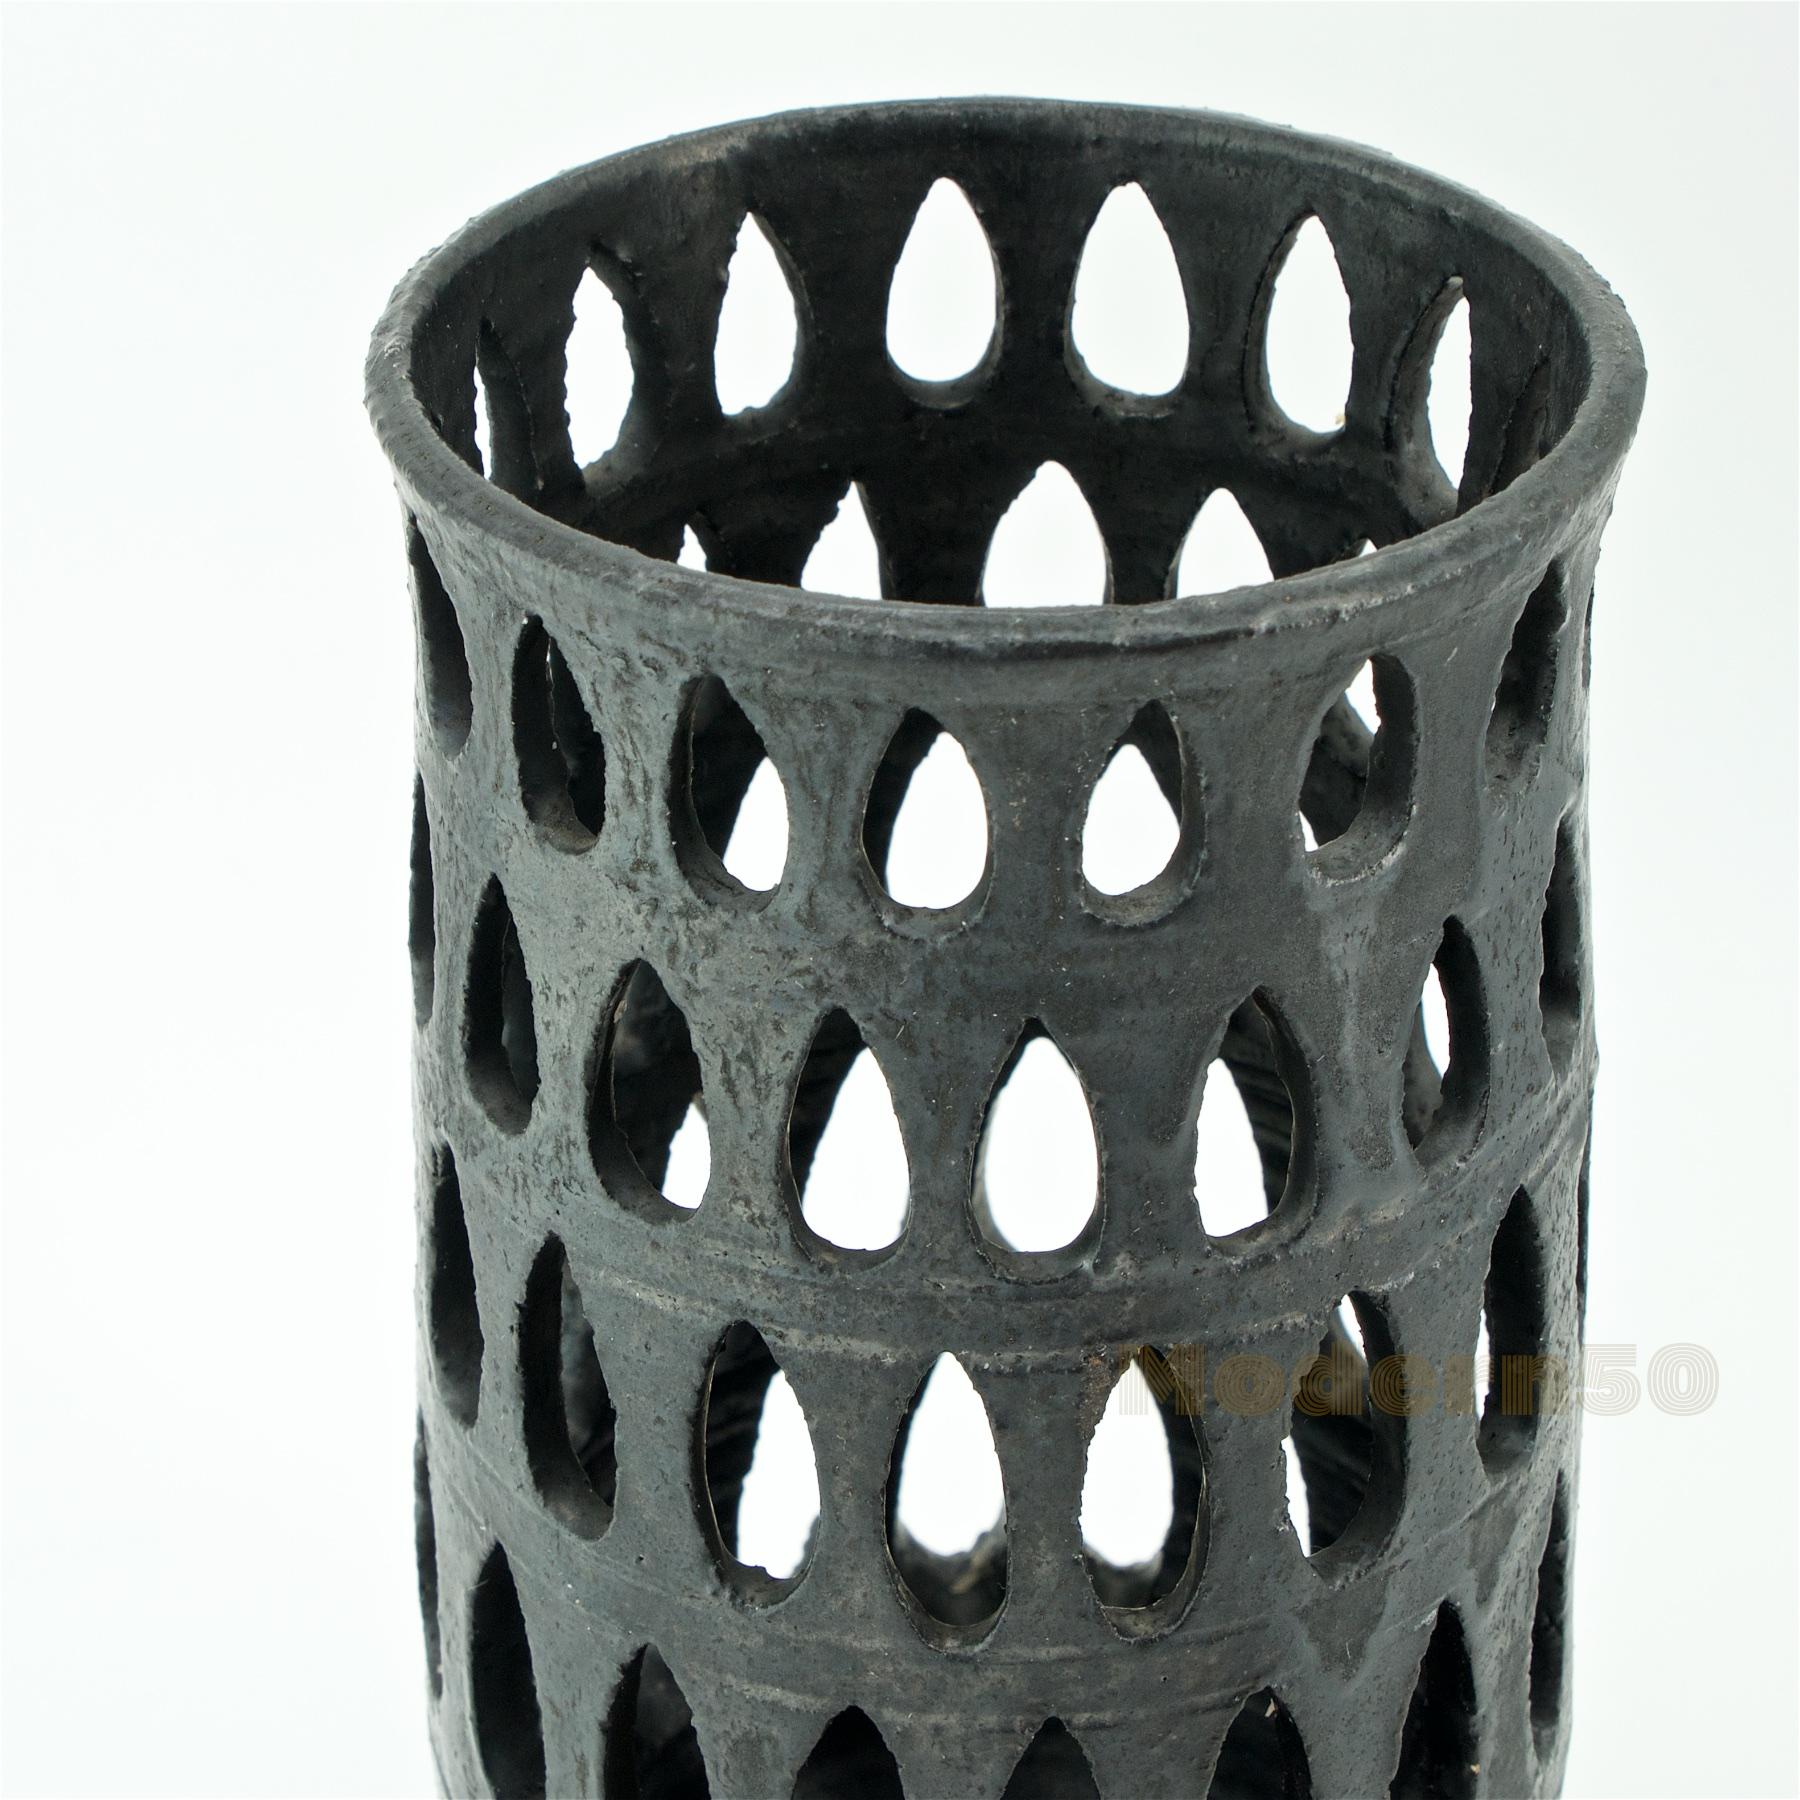 Paul Bellardo Teardrop Perforated Studio Pottery Sculptural Vase In Good Condition For Sale In Hyattsville, MD